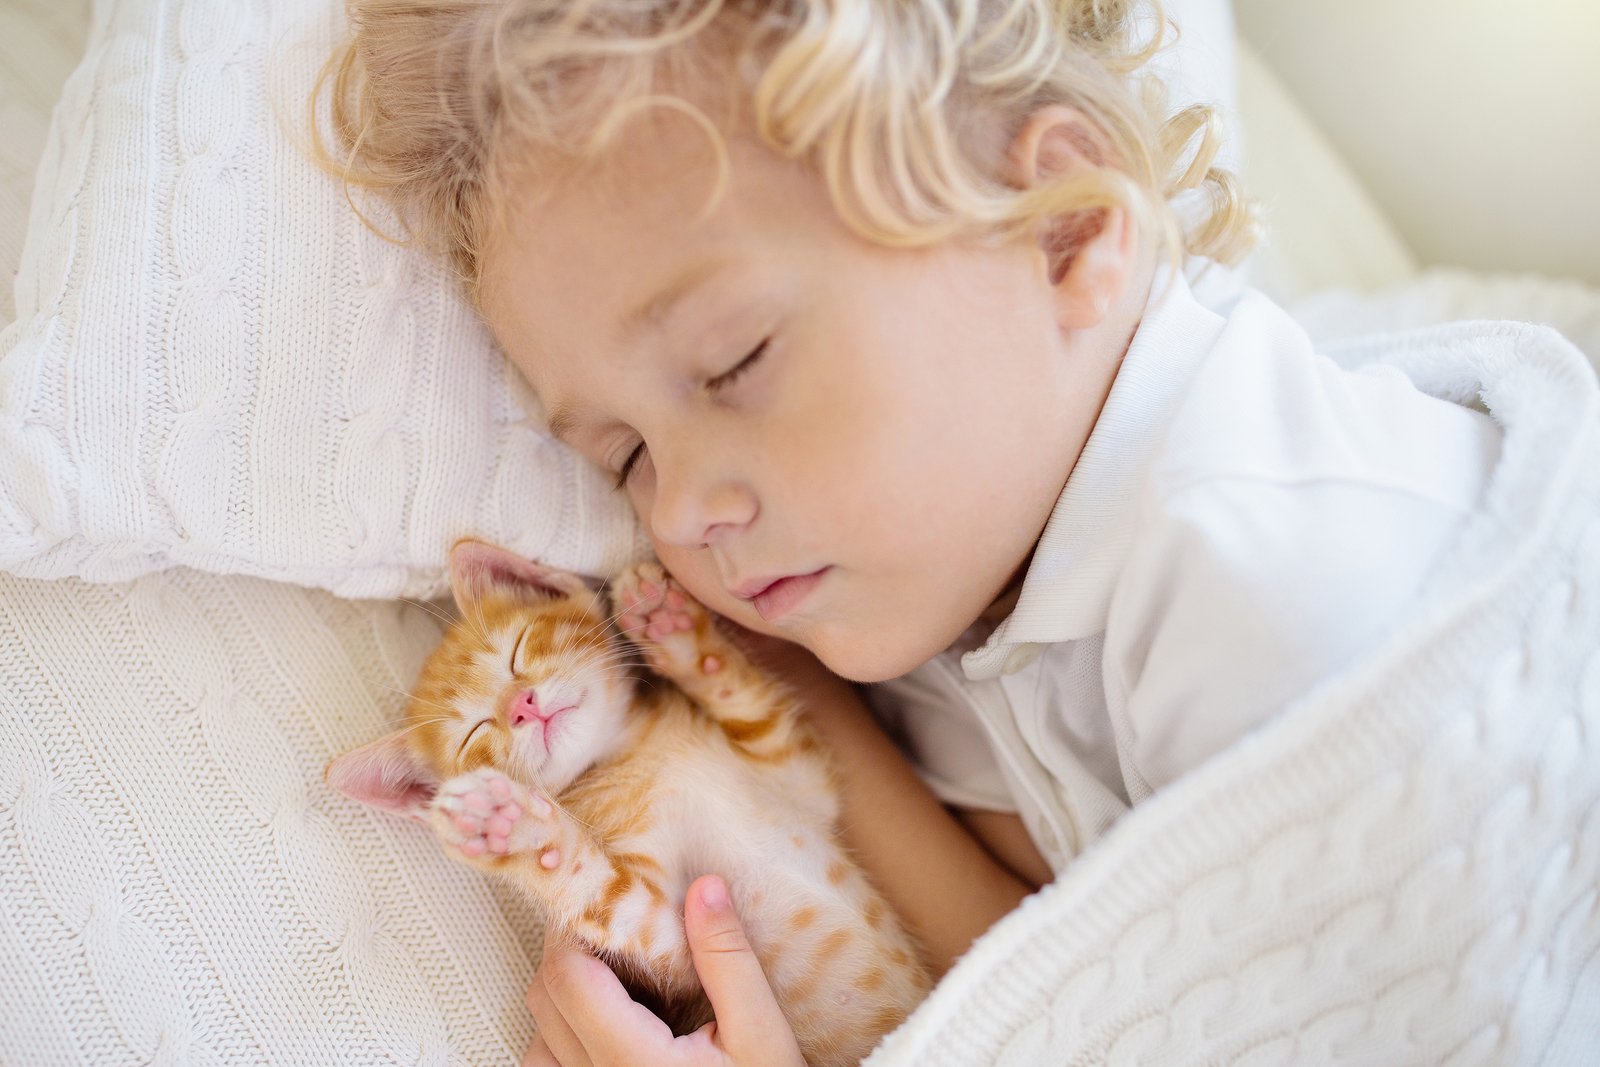 Sleep on sweet little child day. Для малышей (котенок). Спящий младенец с котенком.